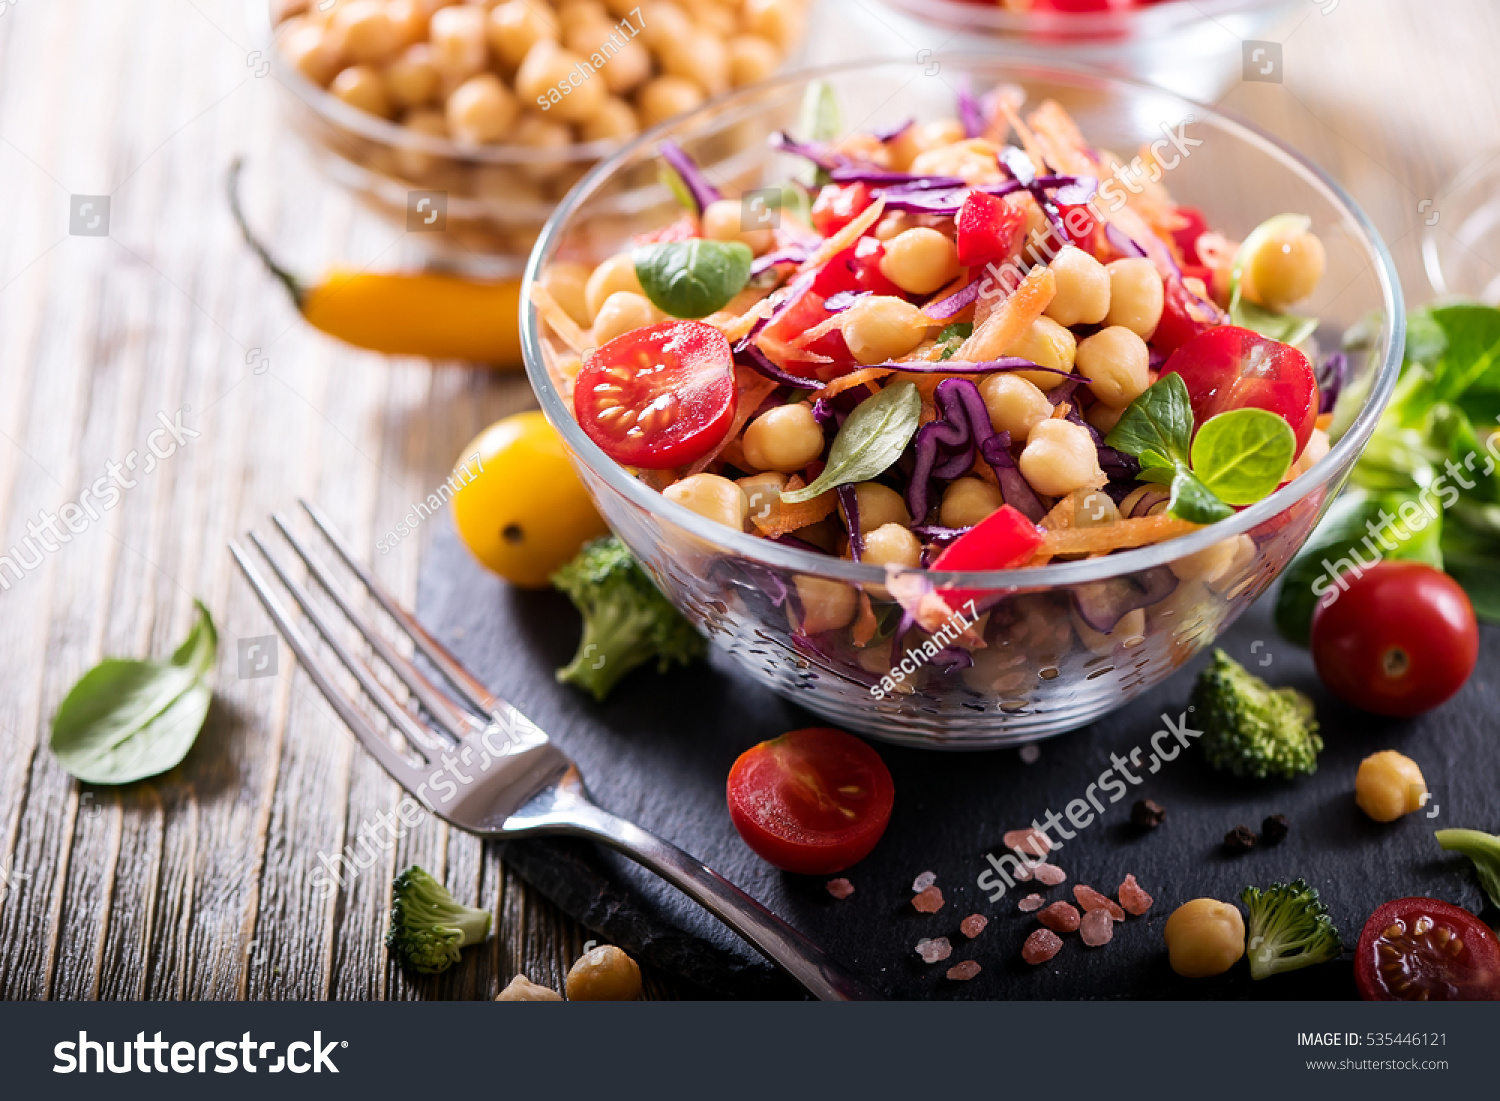 Healthy homemade chickpea and veggies salad, diet, vegetarian, vegan food, vitamin snack #535446121